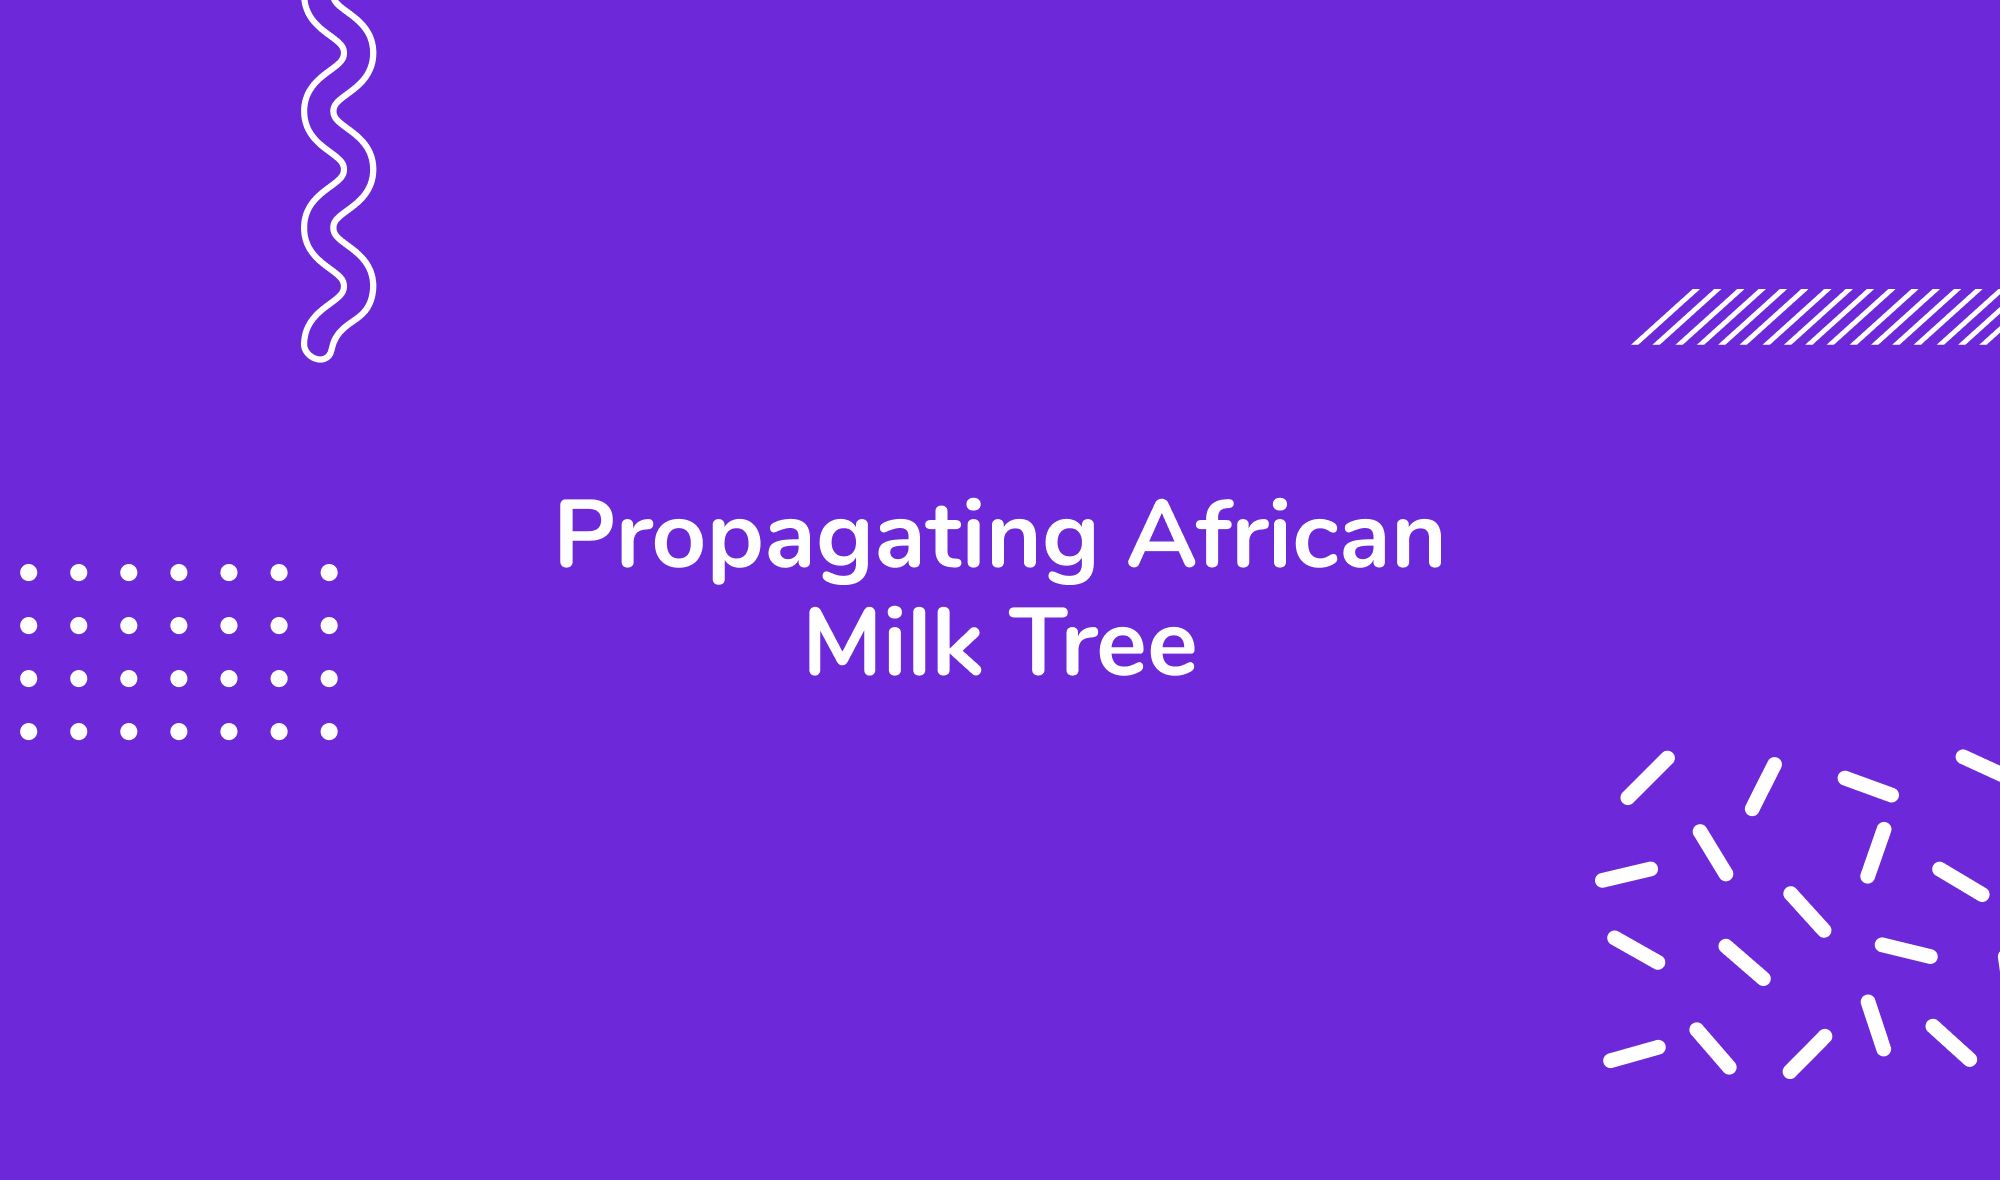 Propagating African Milk Tree